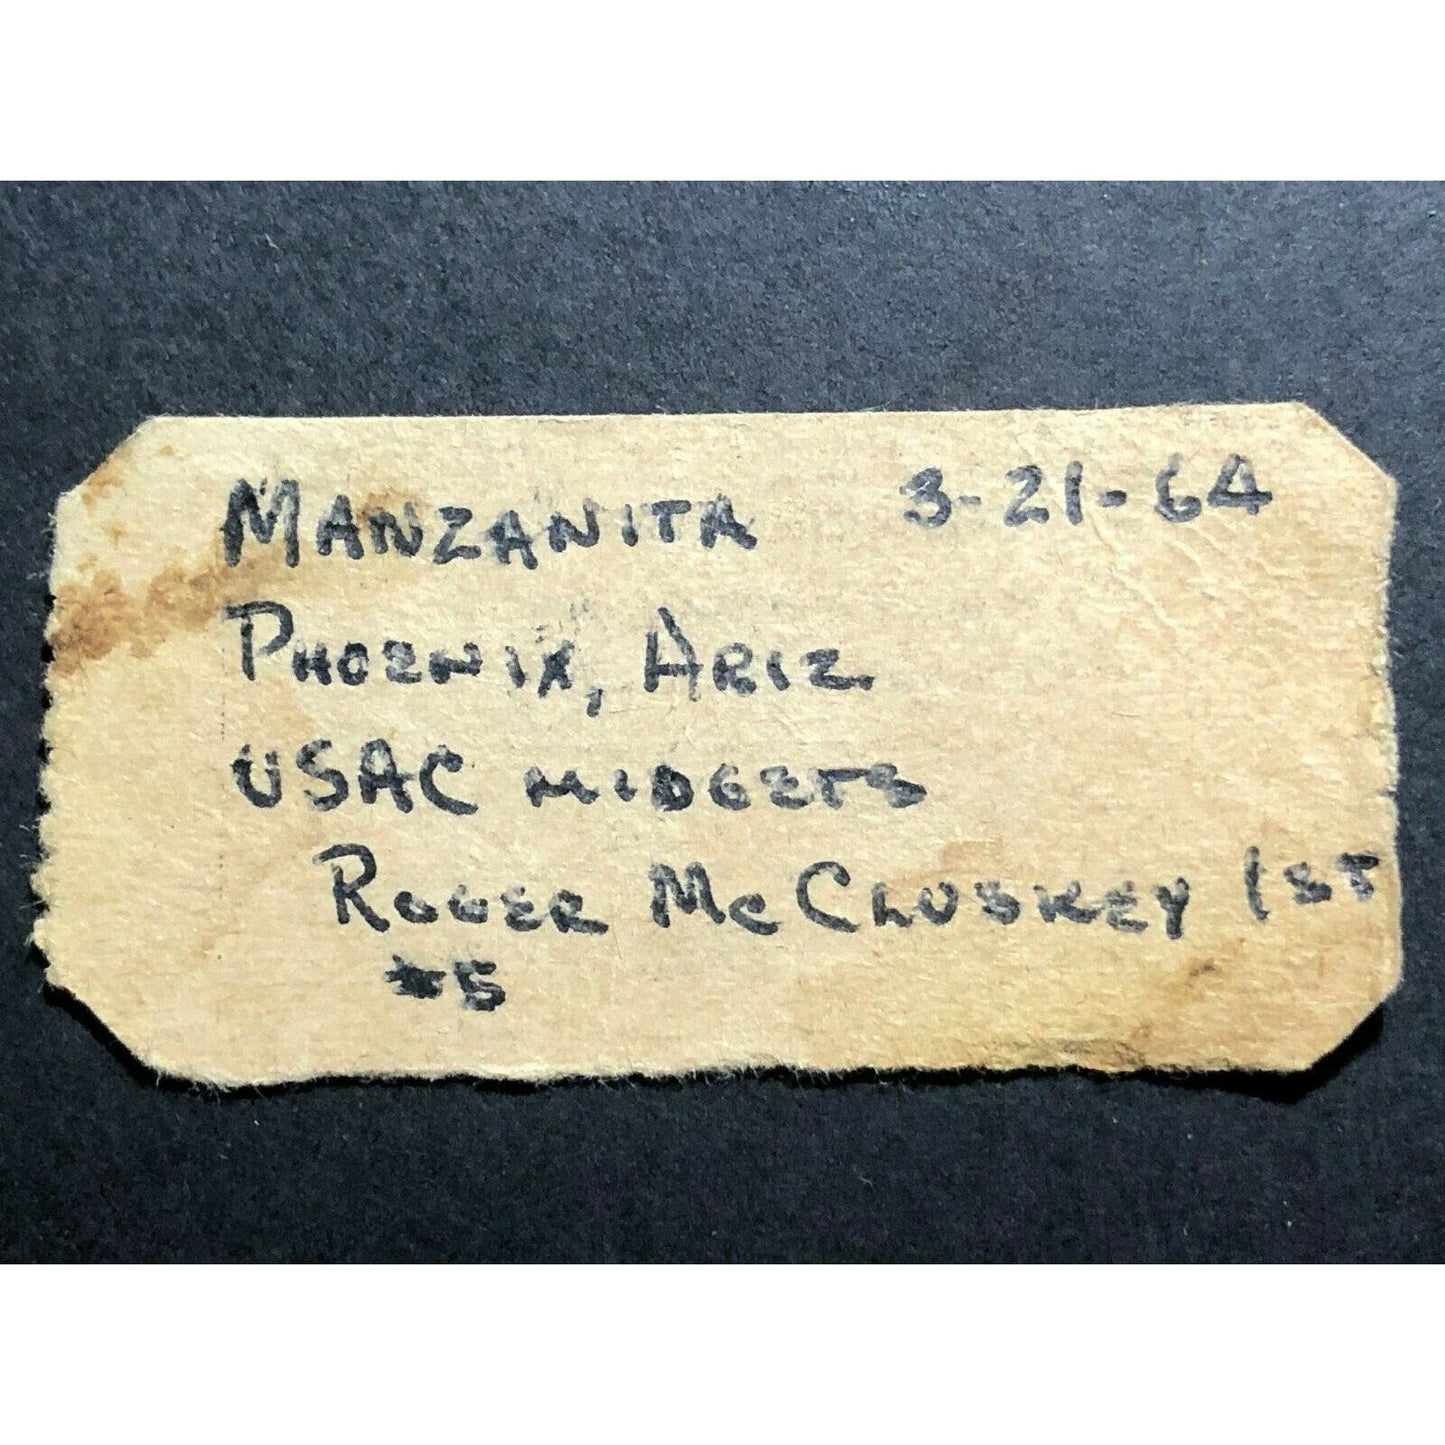 Vintage Race Racing Ticket USAC Midgets Manzanita Phoenix March 21 1964